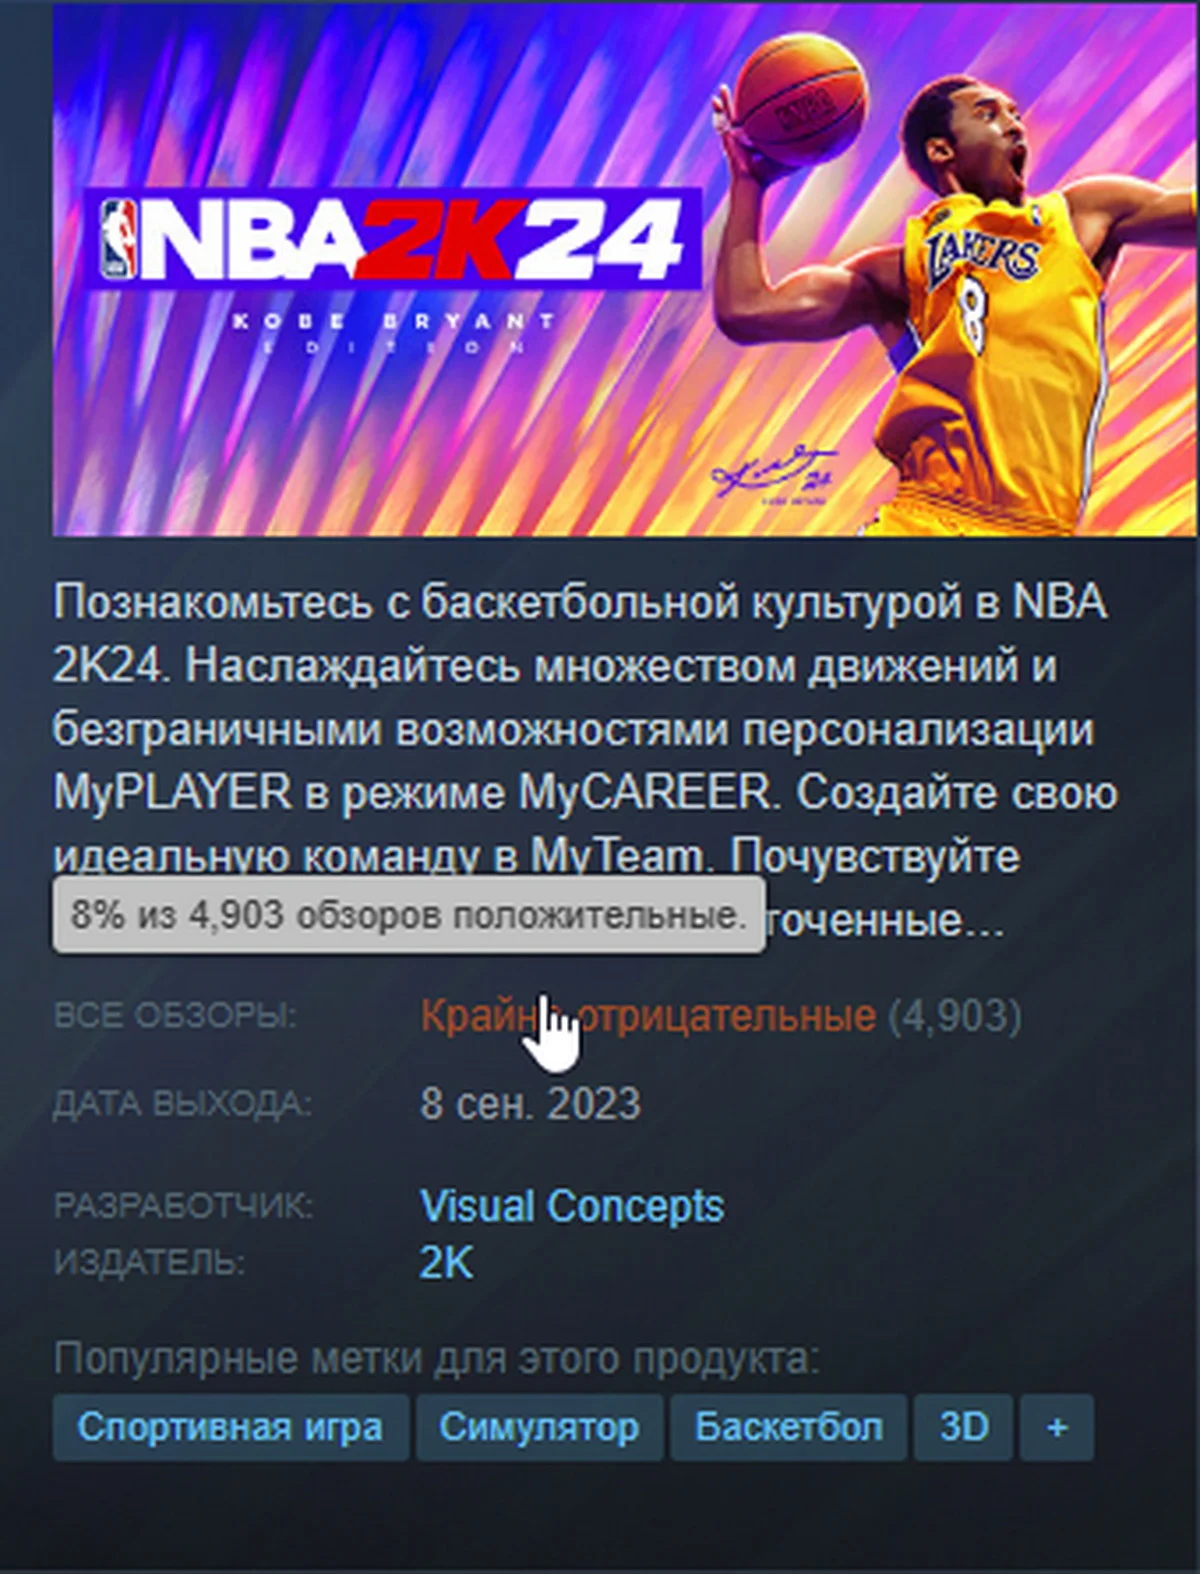 NBA 2K24 удалось побить антирекорд Overwatch 2 по негативным отзывам в Steam - фото 1